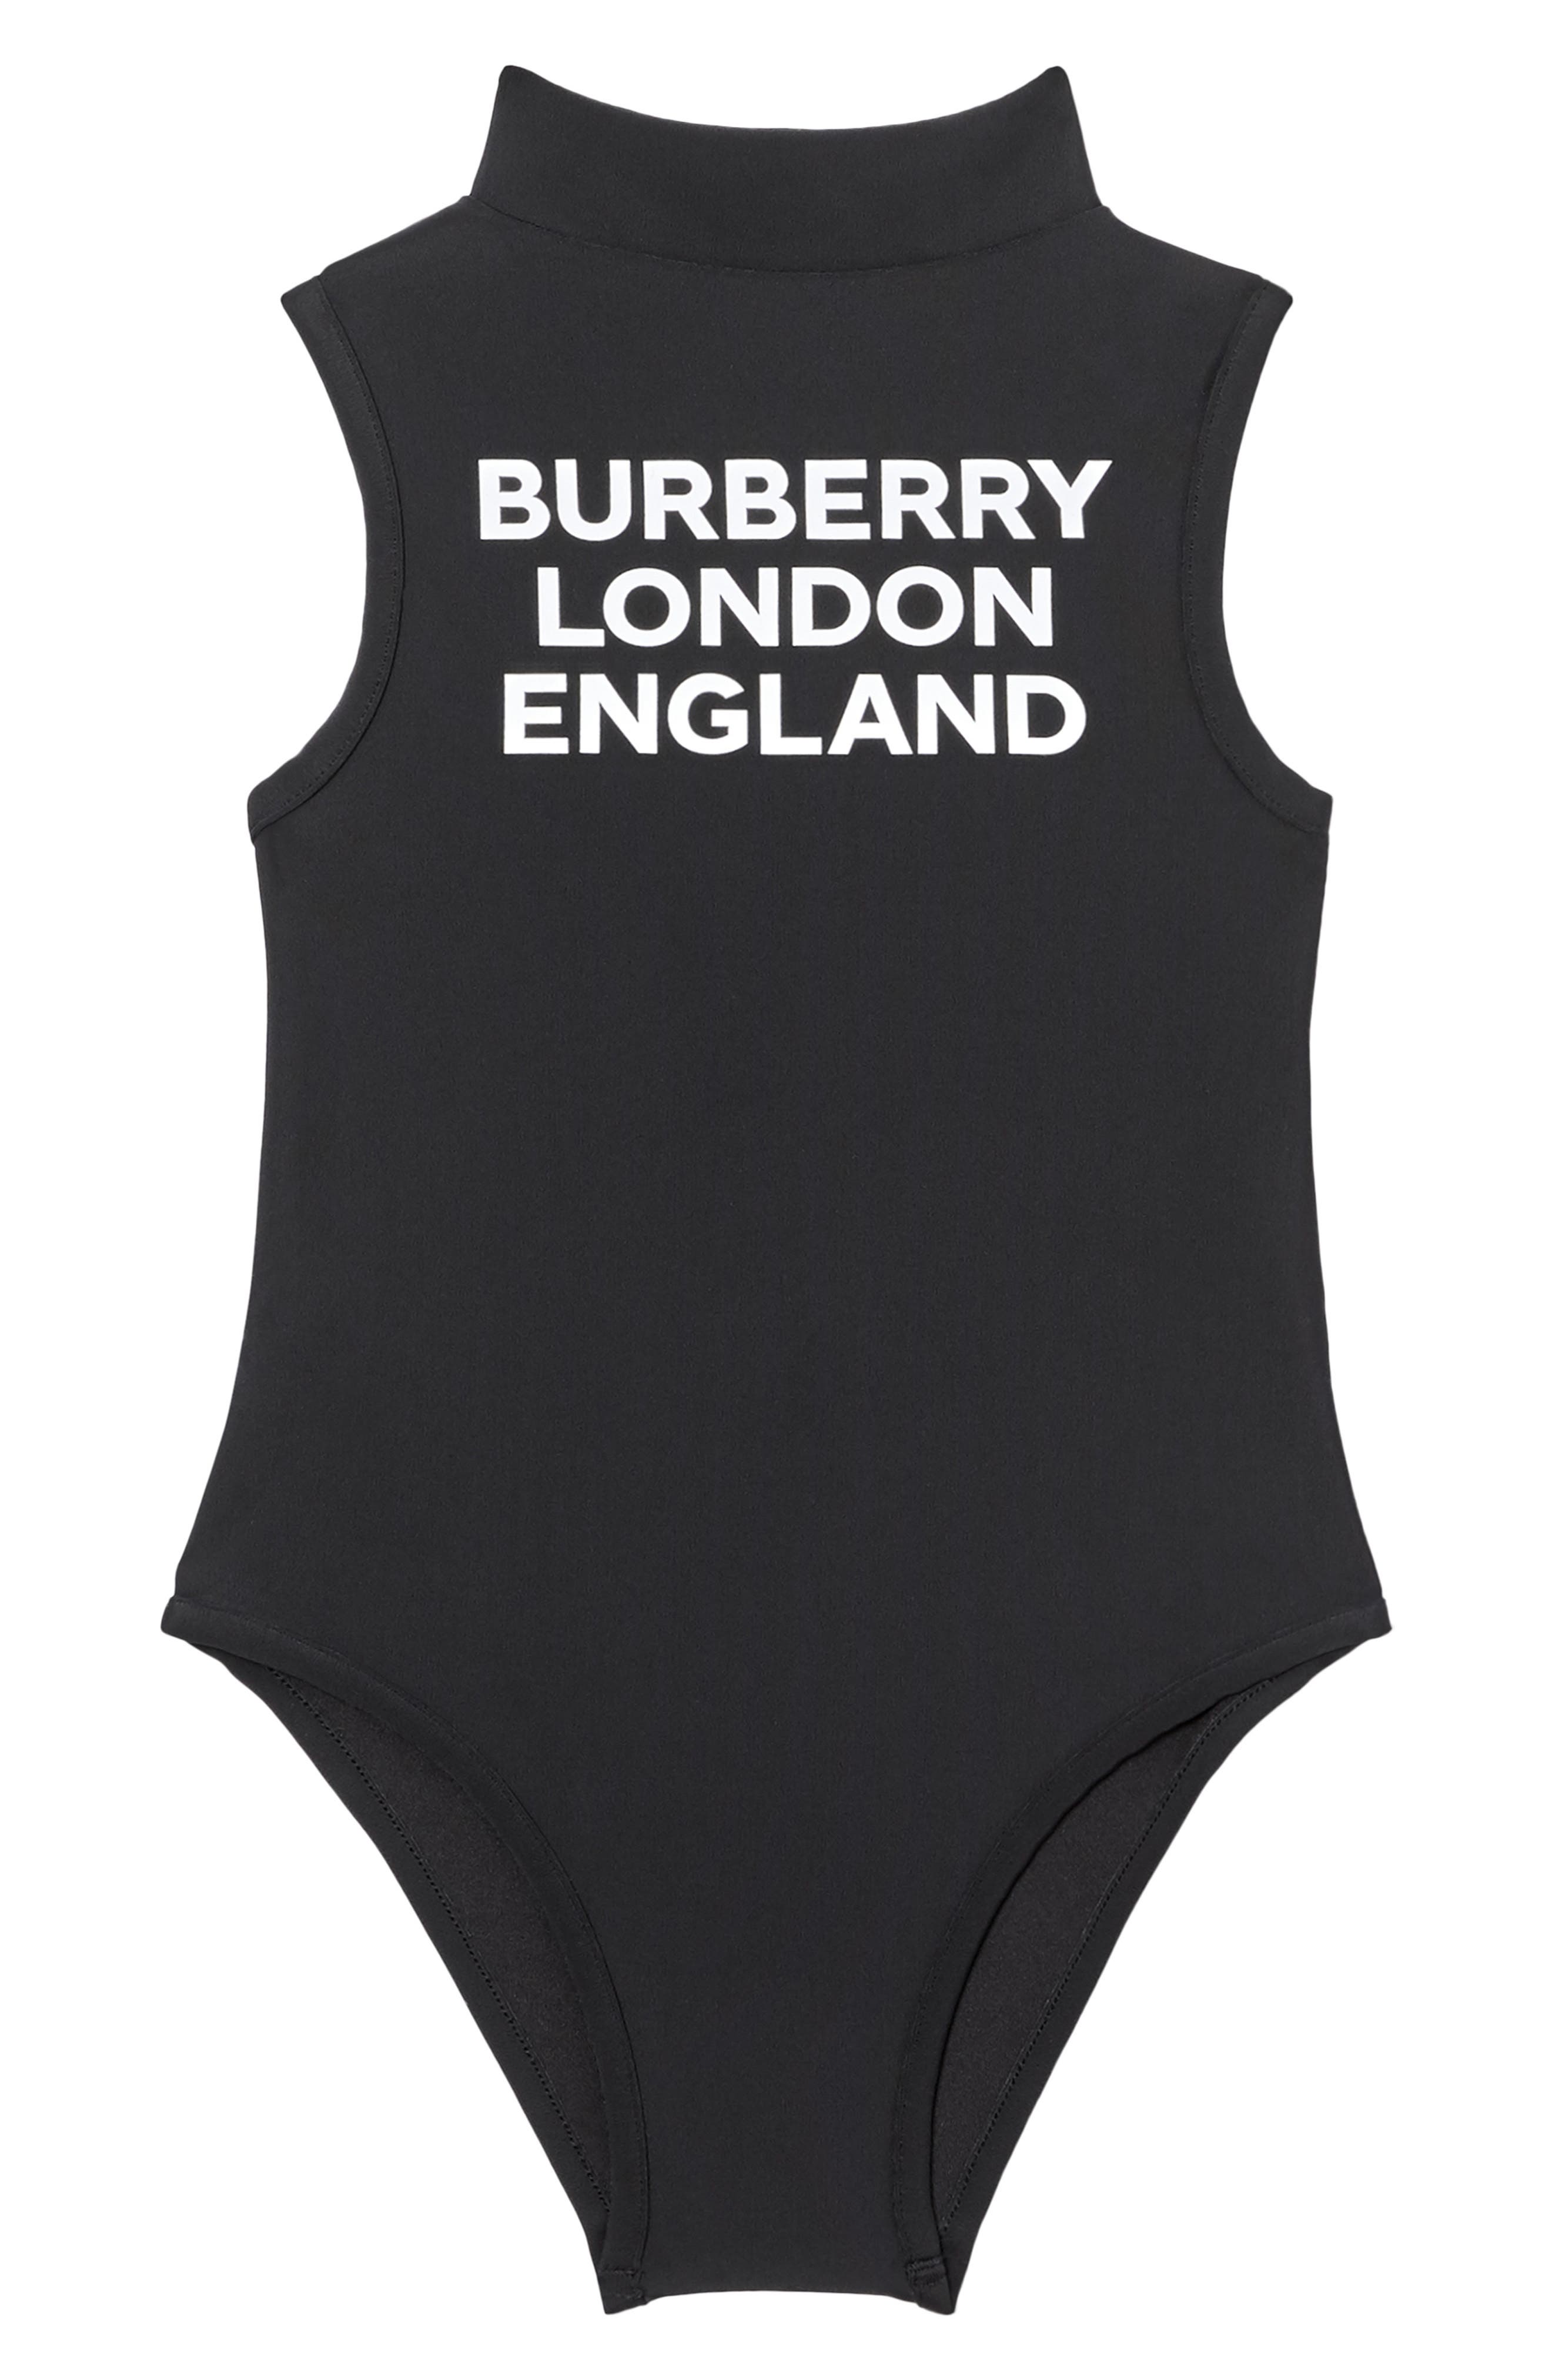 nordstrom burberry bathing suit